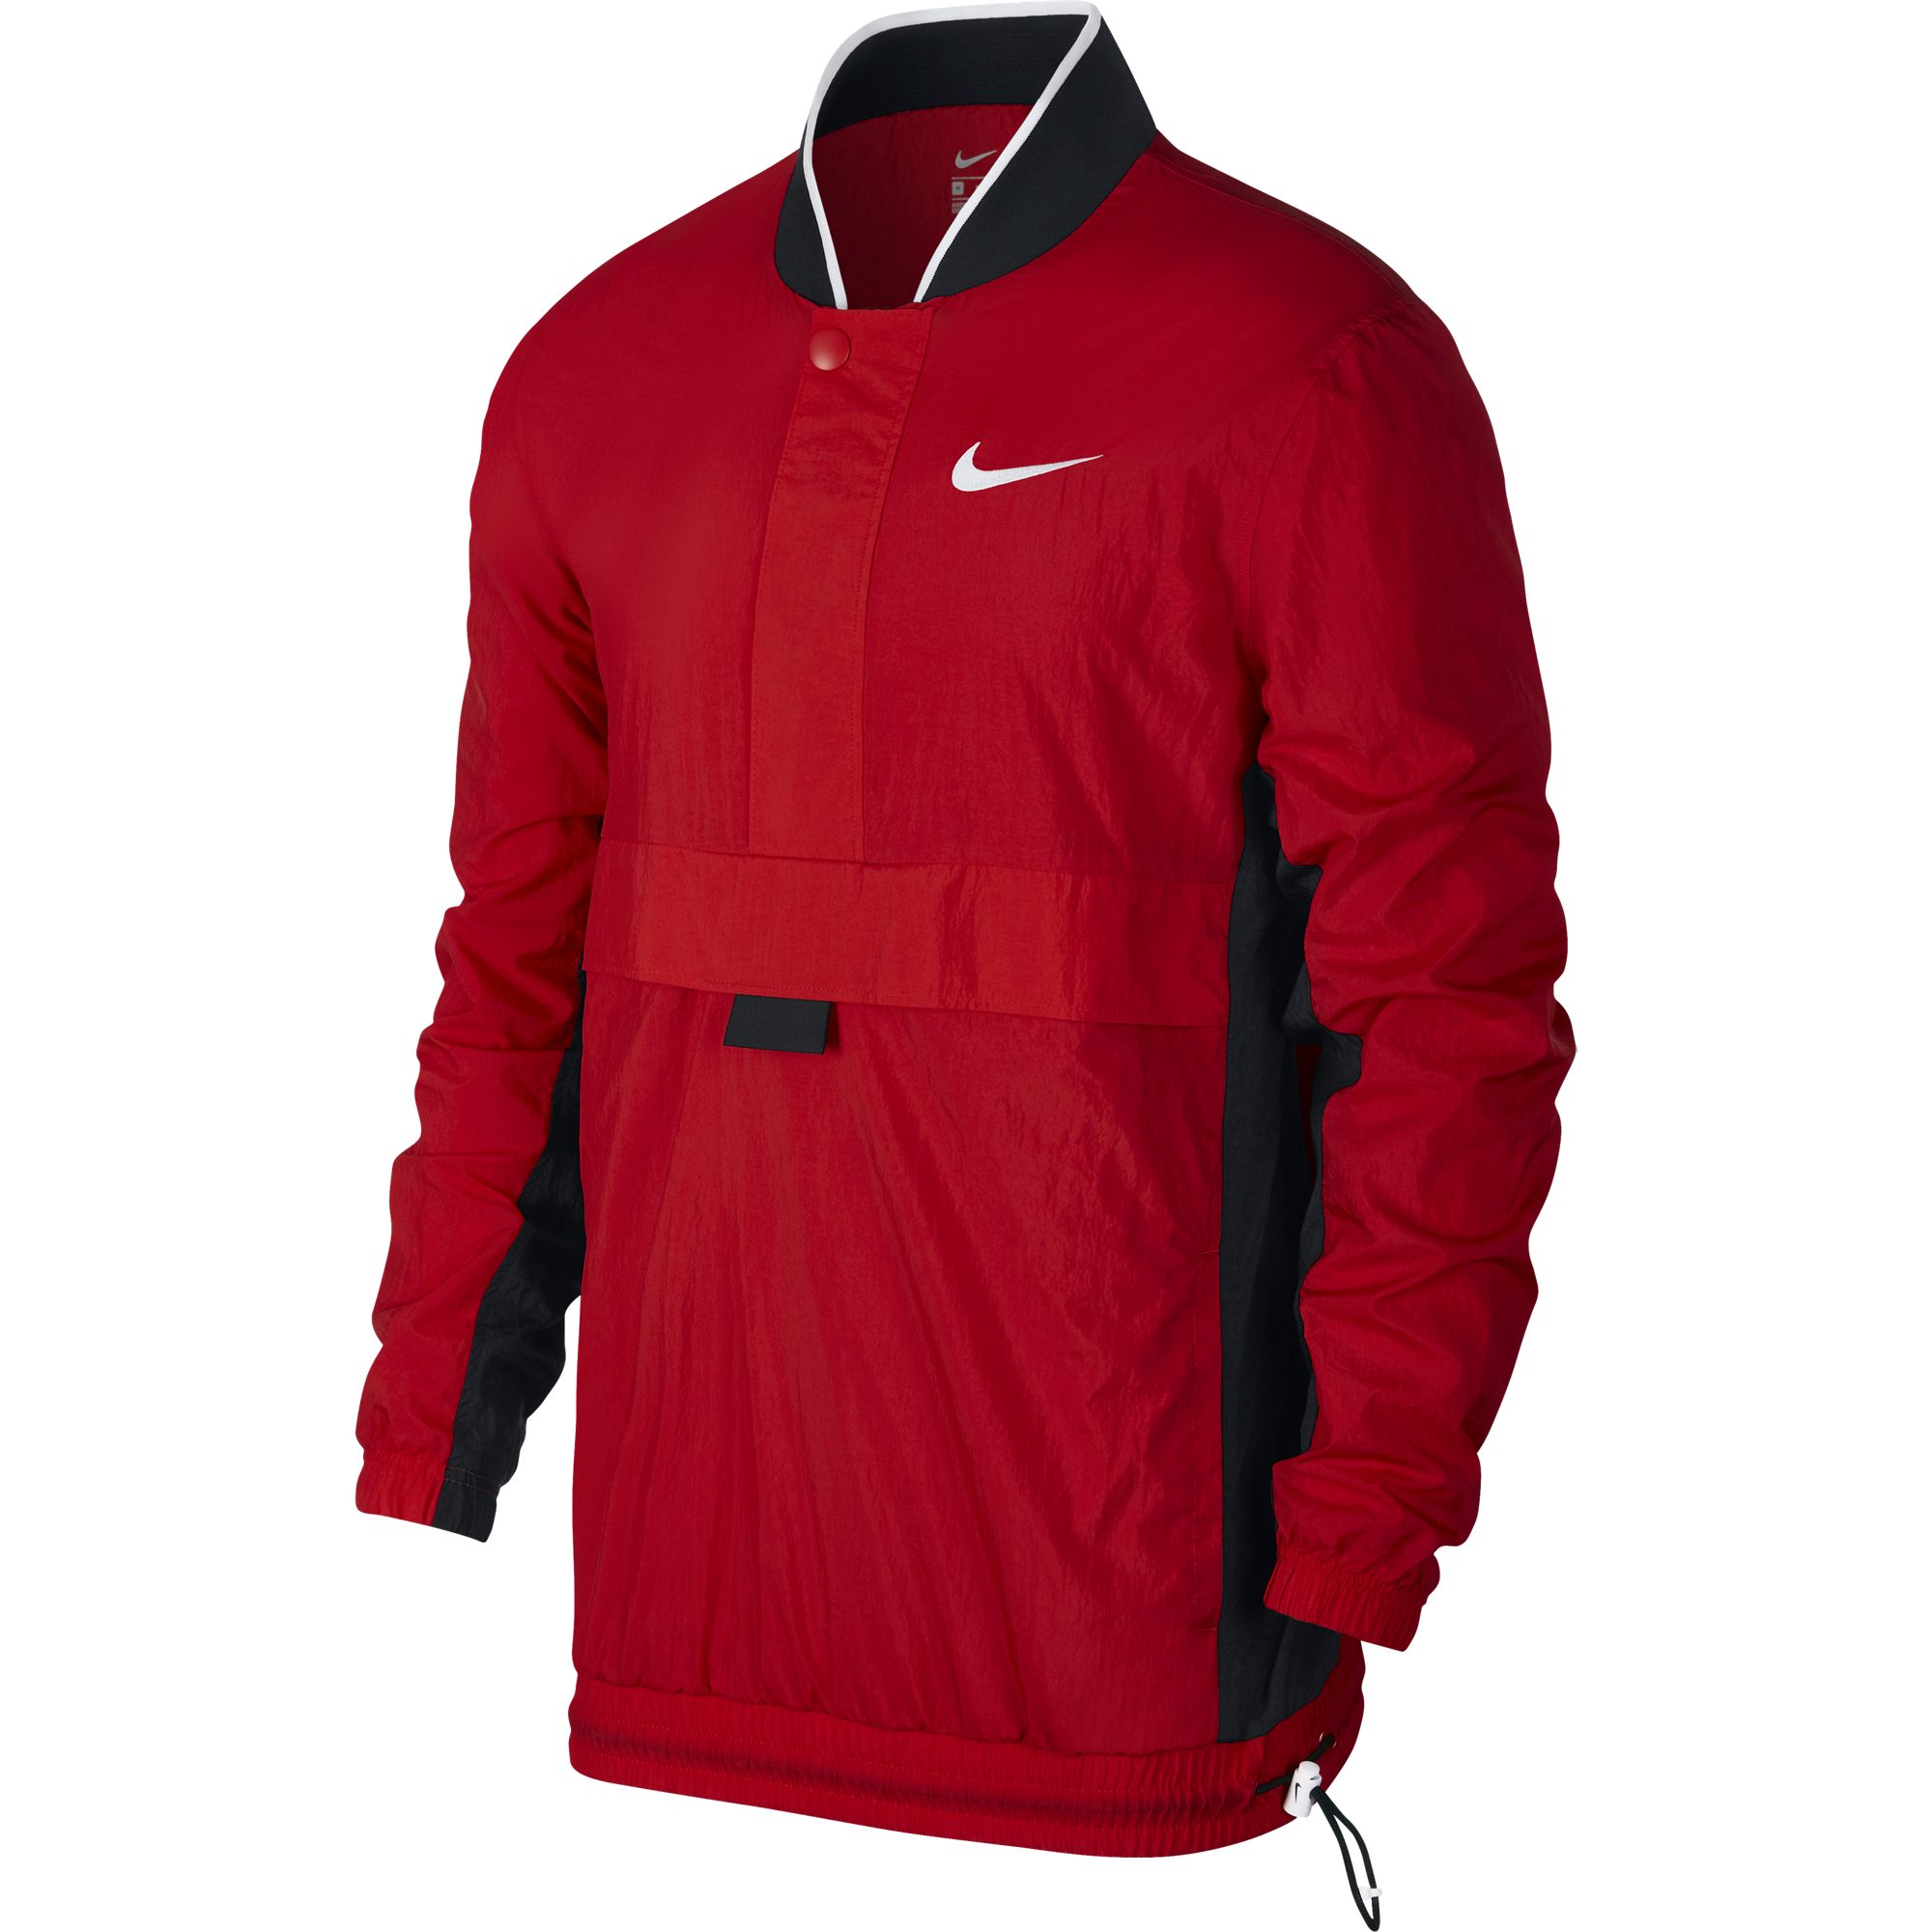 Баскетбольная куртка Nike Men's Basketball Jacket - картинка